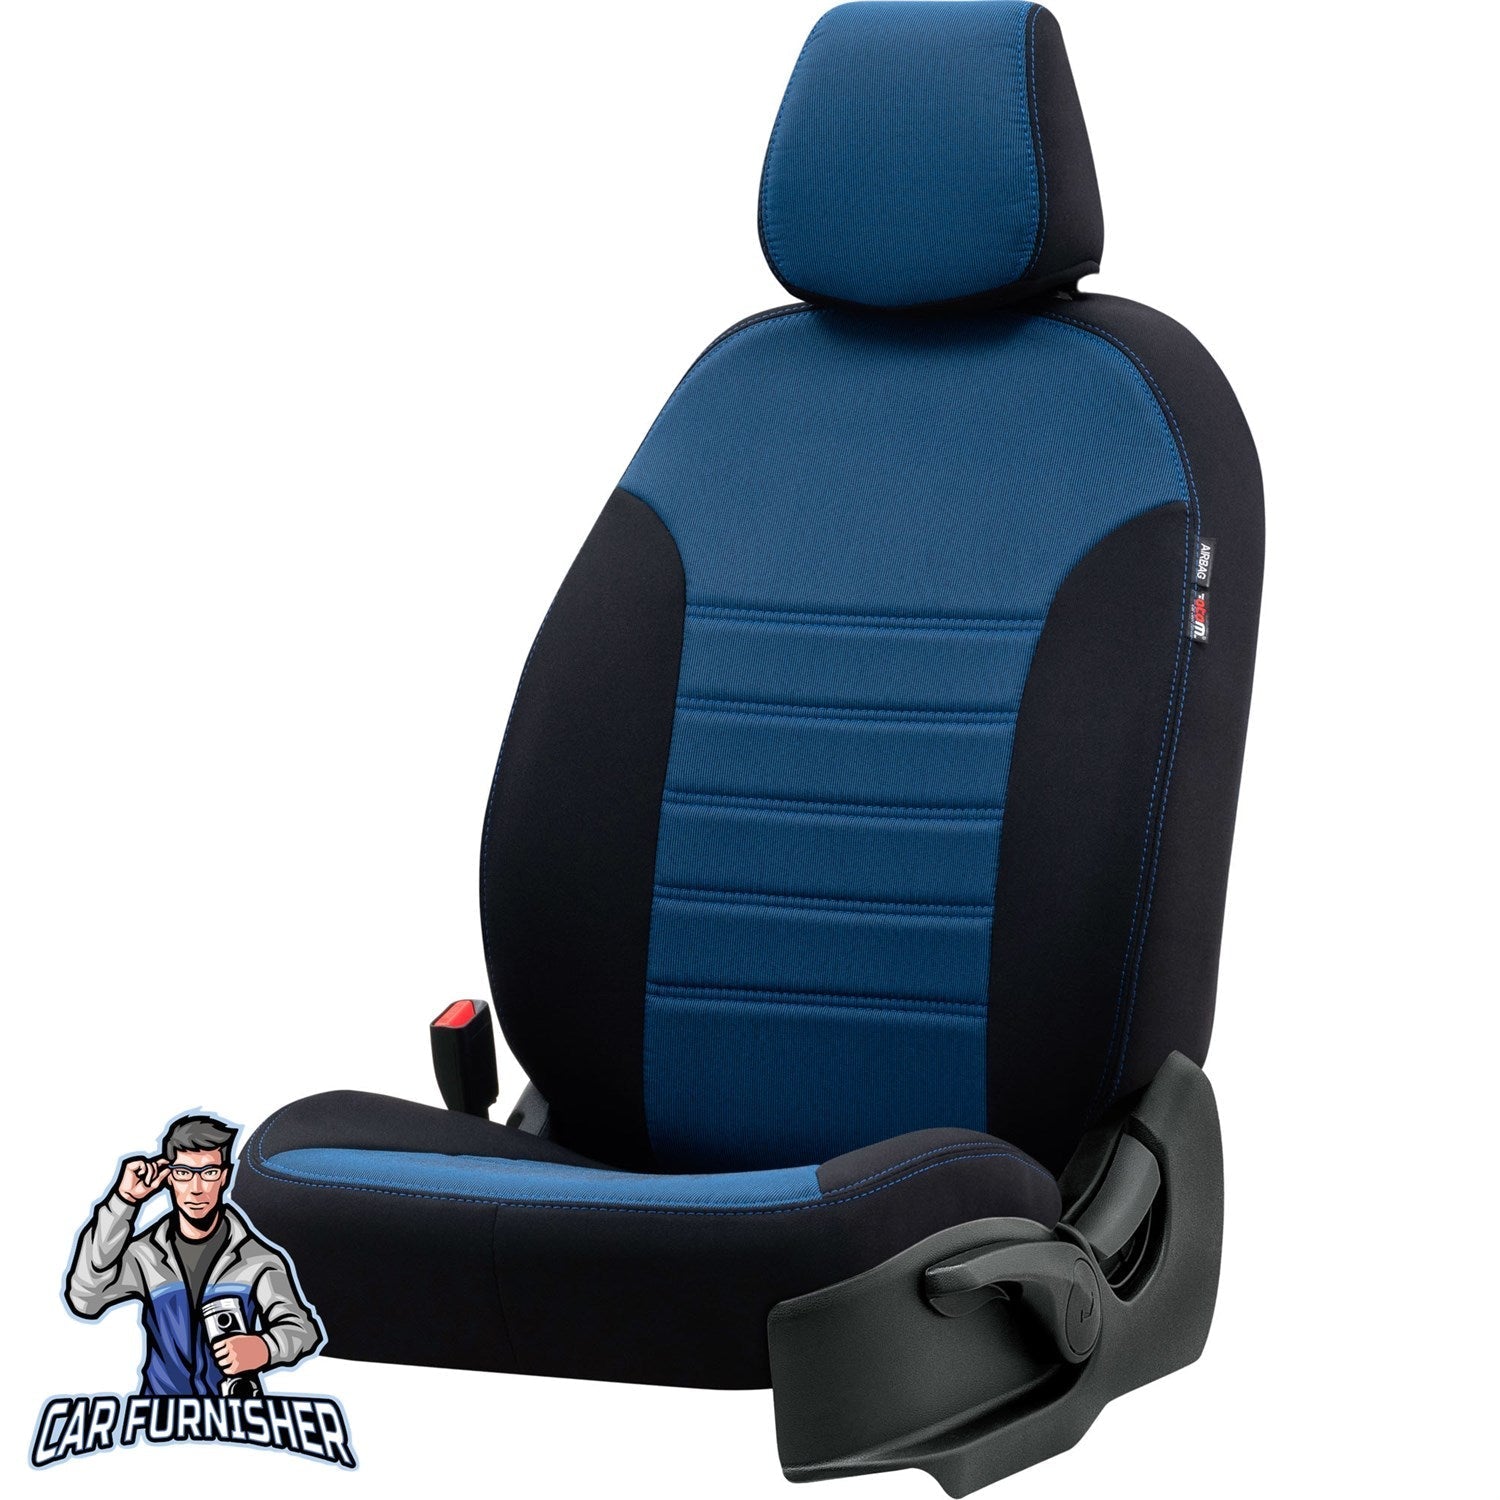 Ford S-Max Seat Covers Original Jacquard Design Blue Jacquard Fabric